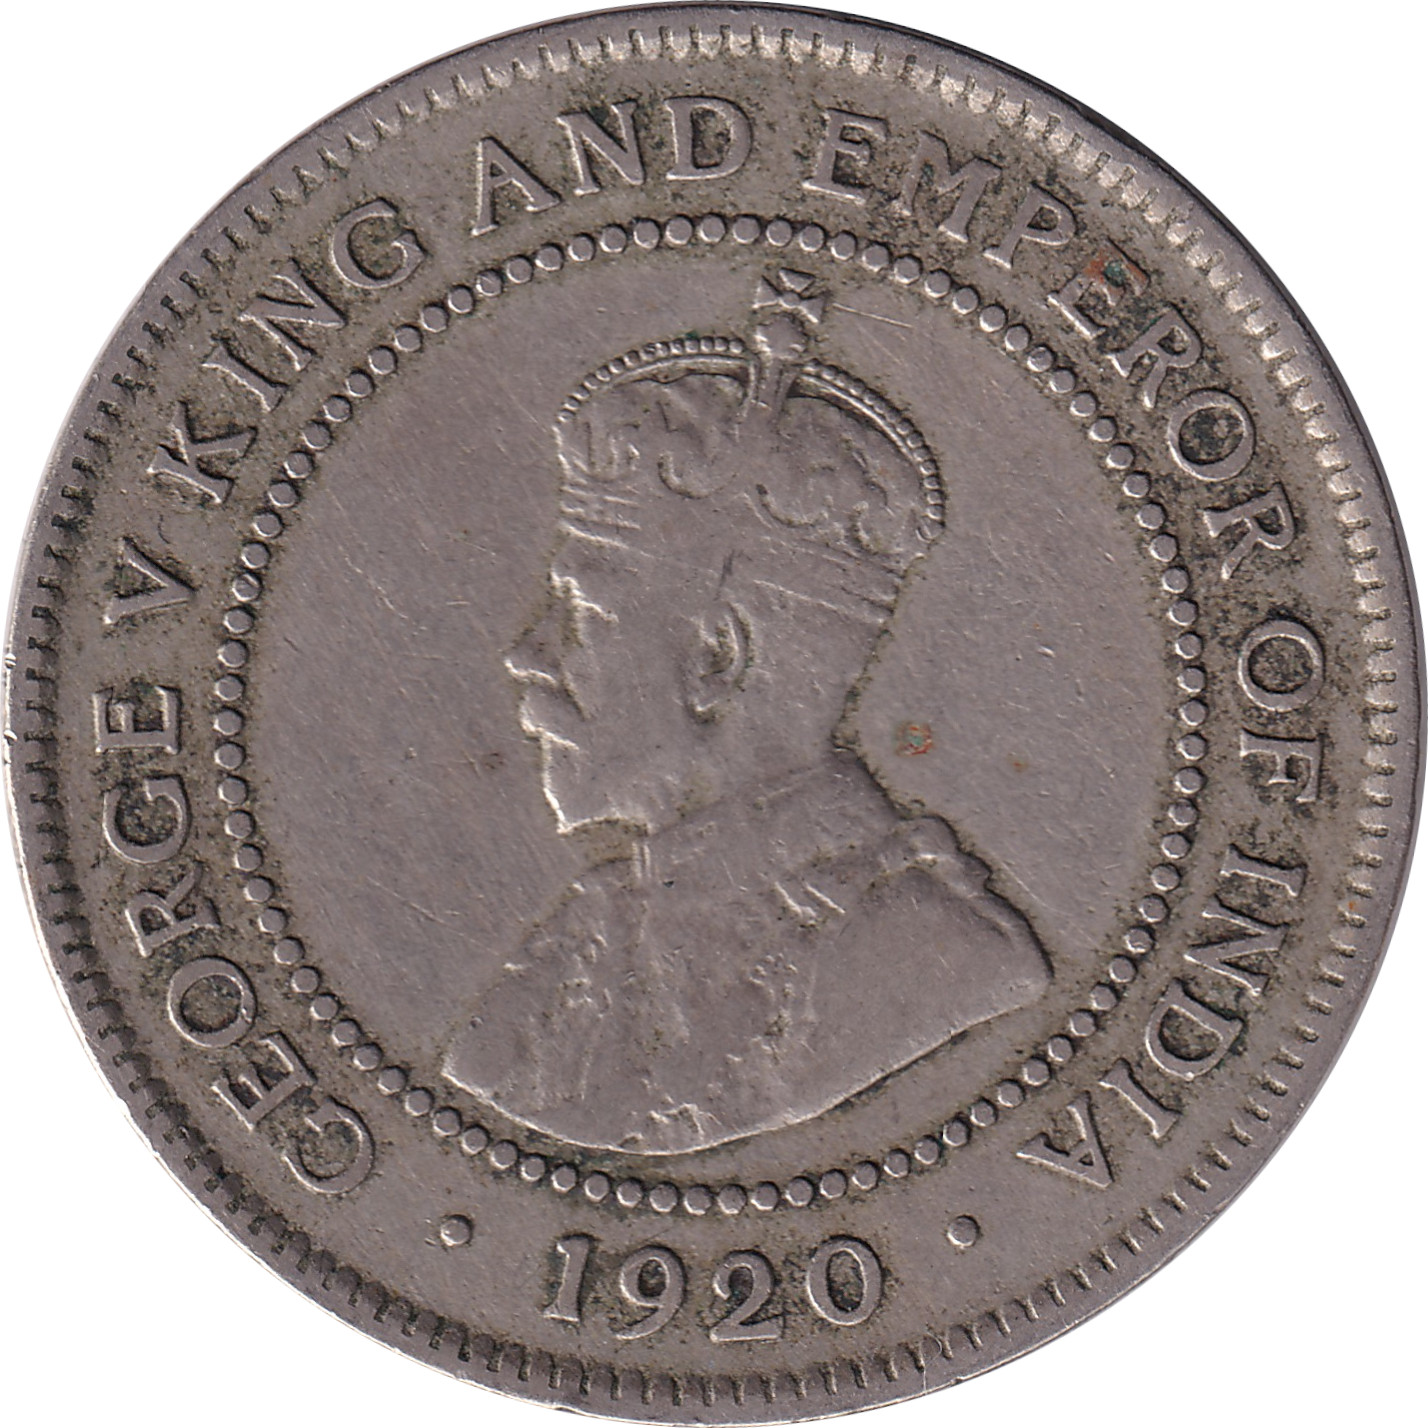 1 penny - George V